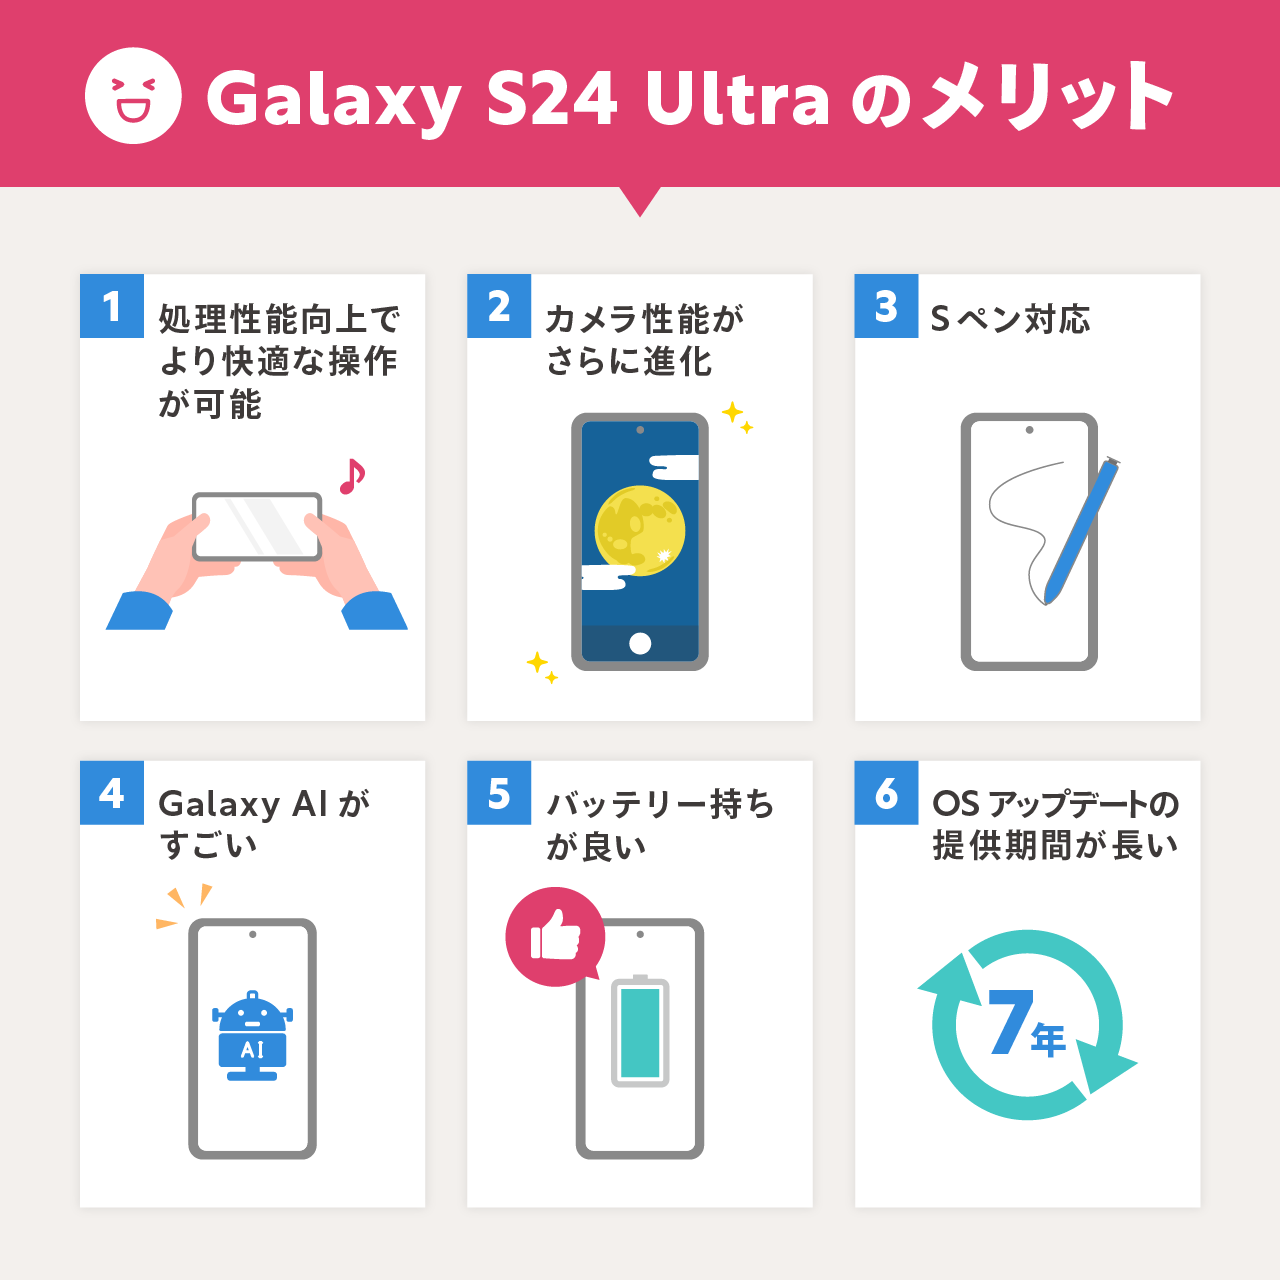 Galaxy S24 Ultraのメリット